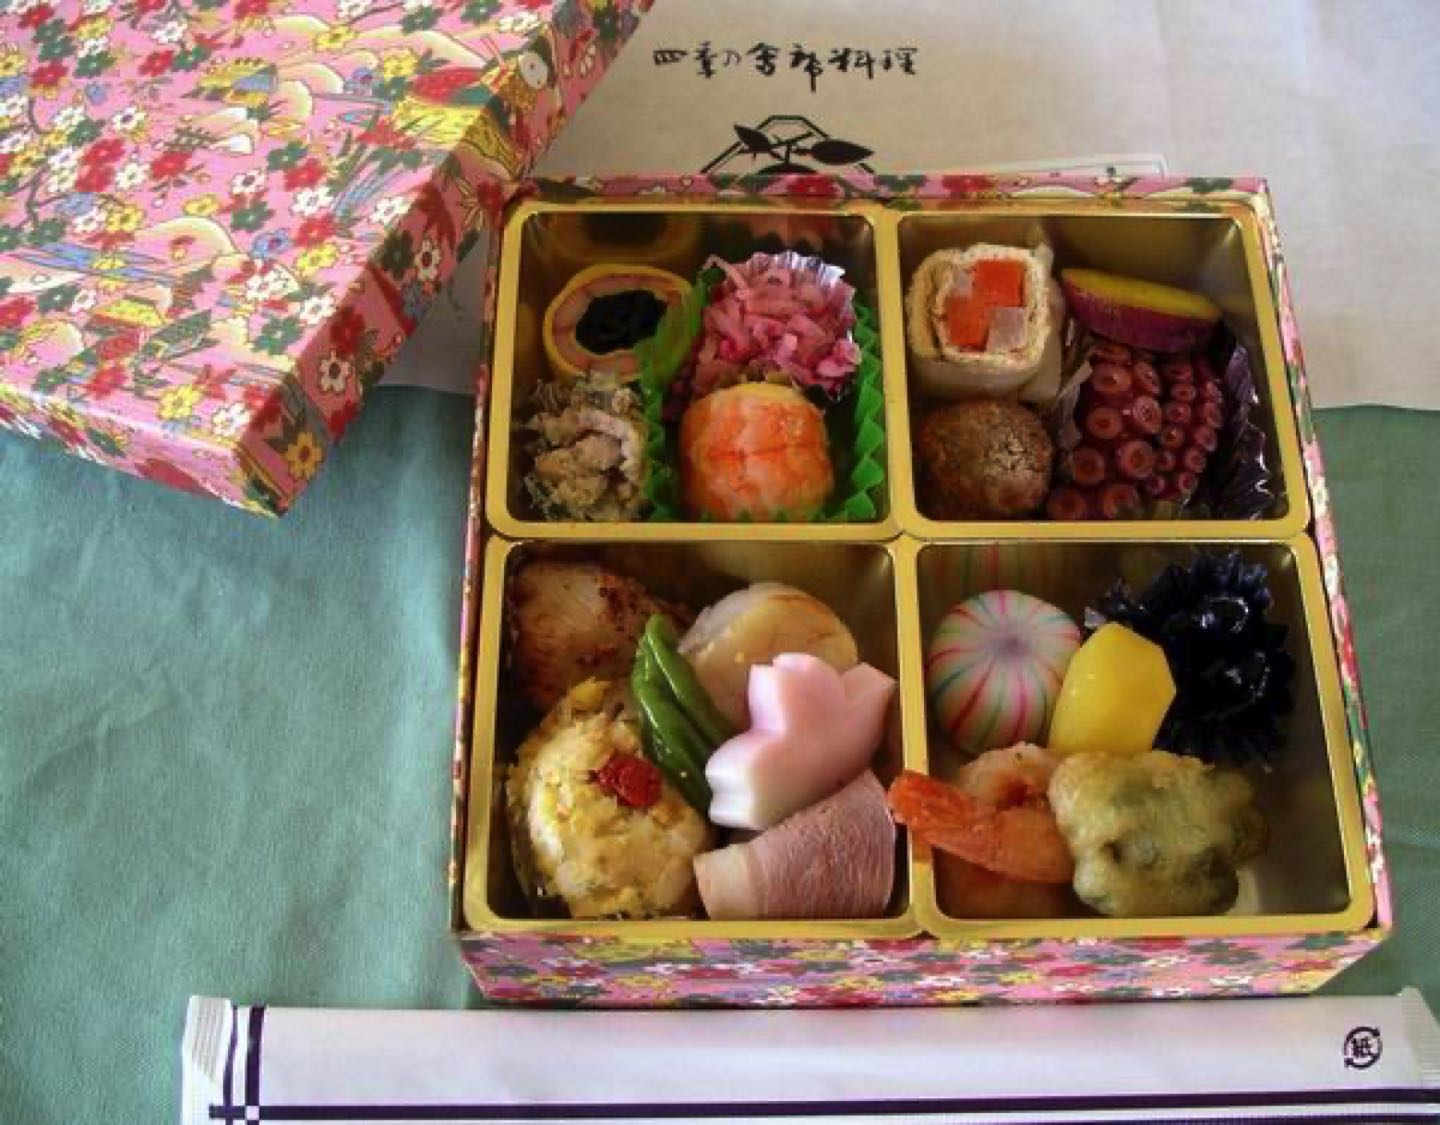 Tradicional japonese bento food boxes